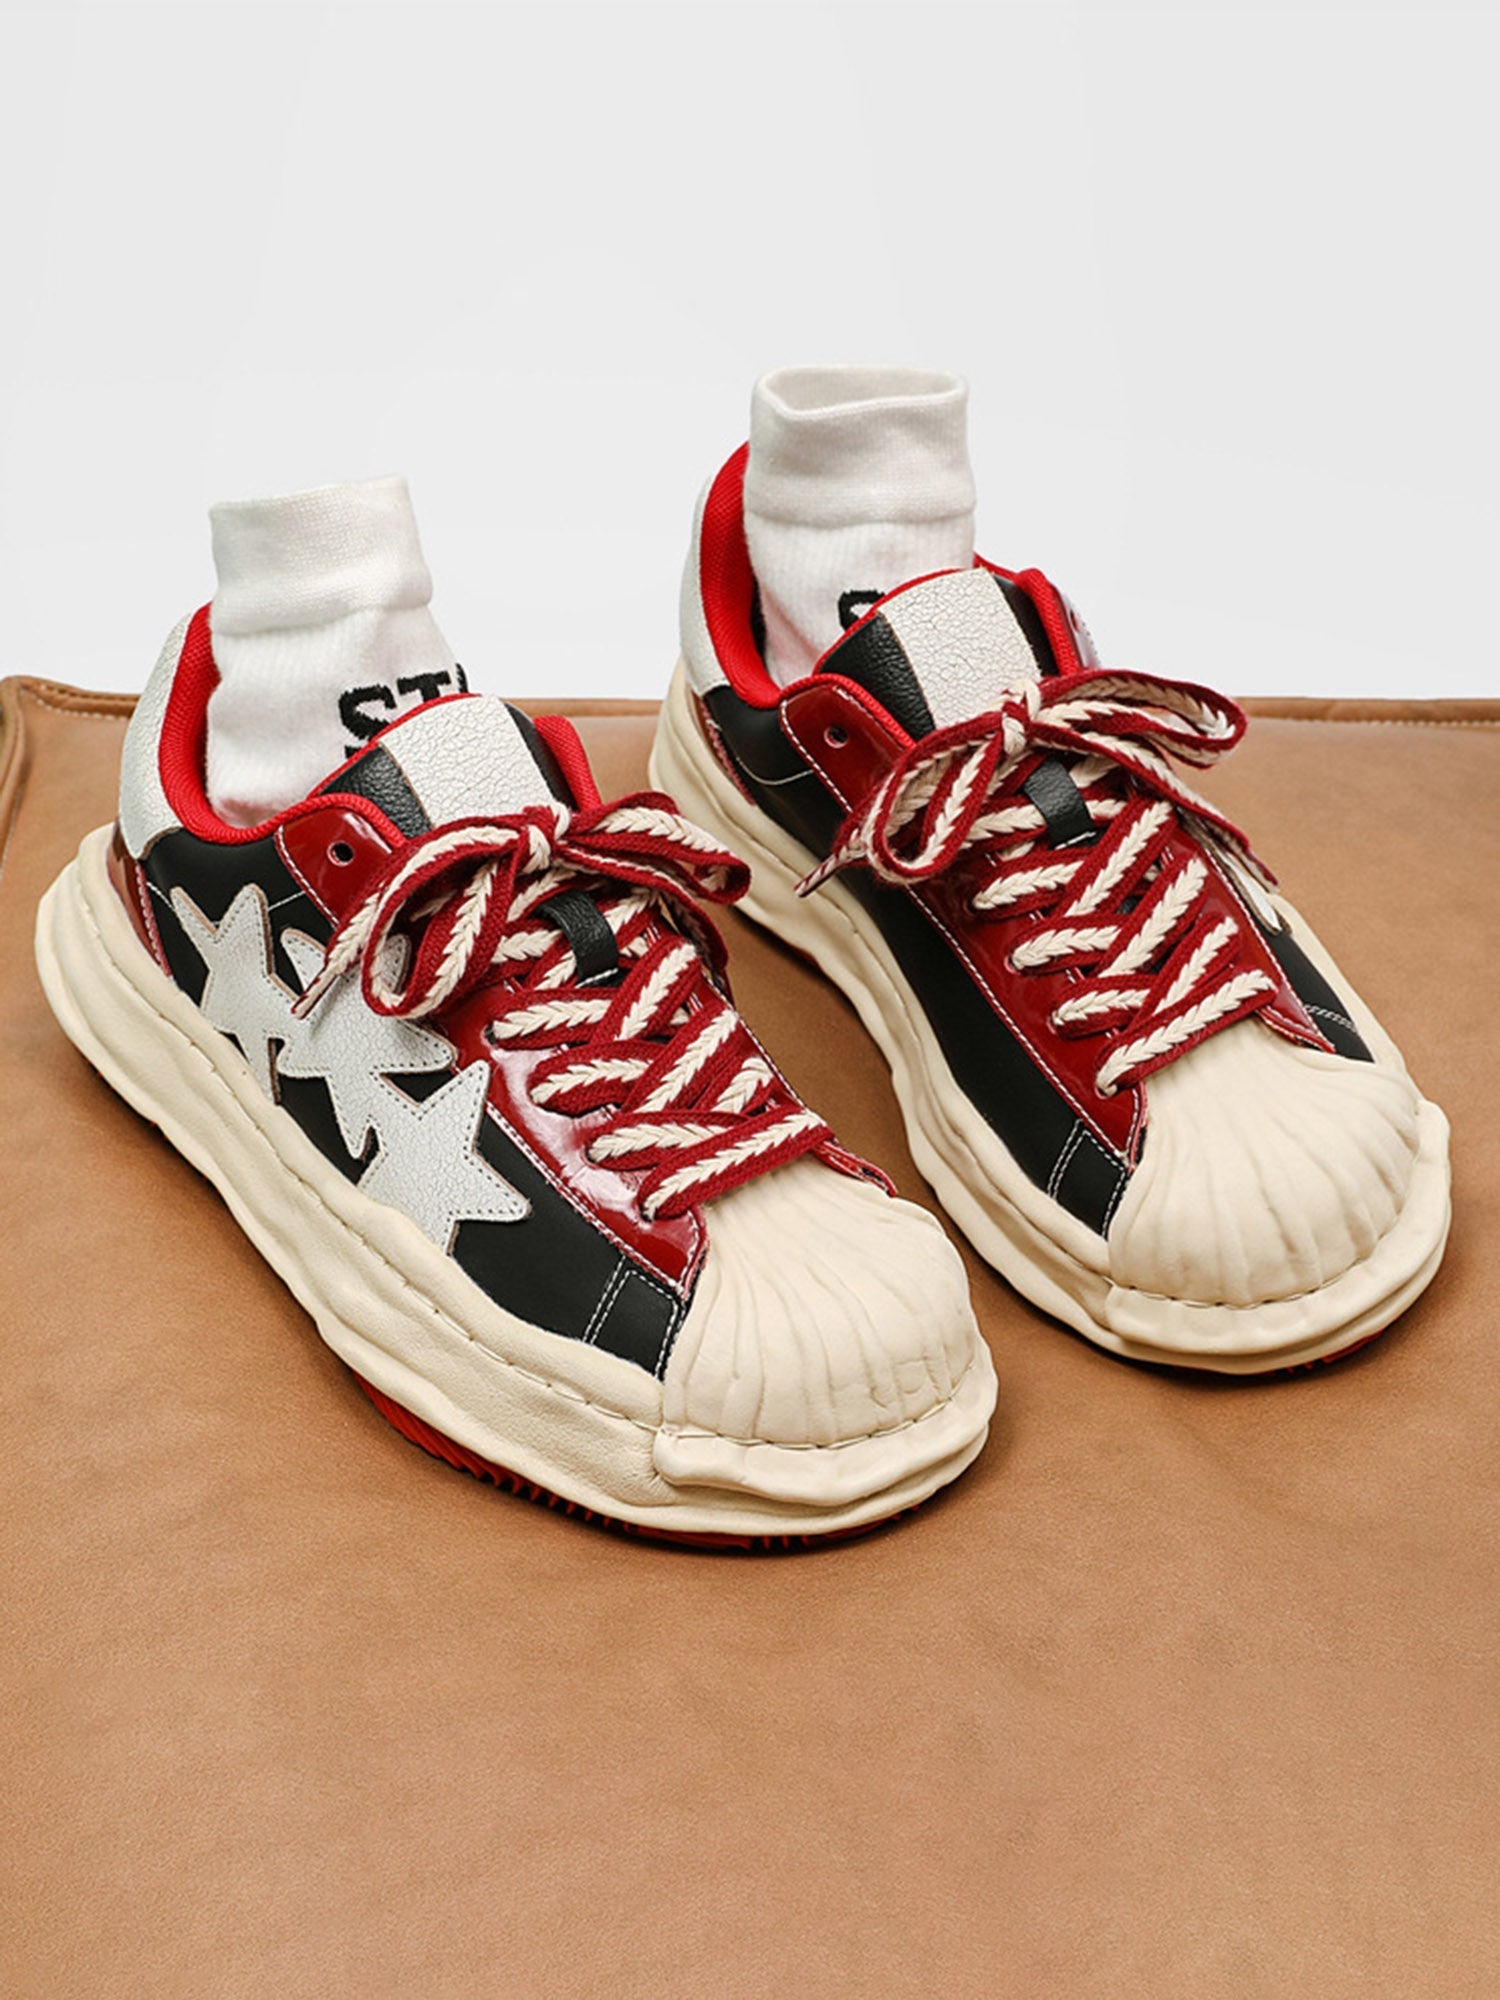 Dragon Red Shell Toe Dissolving Shoes Retro Sneakers